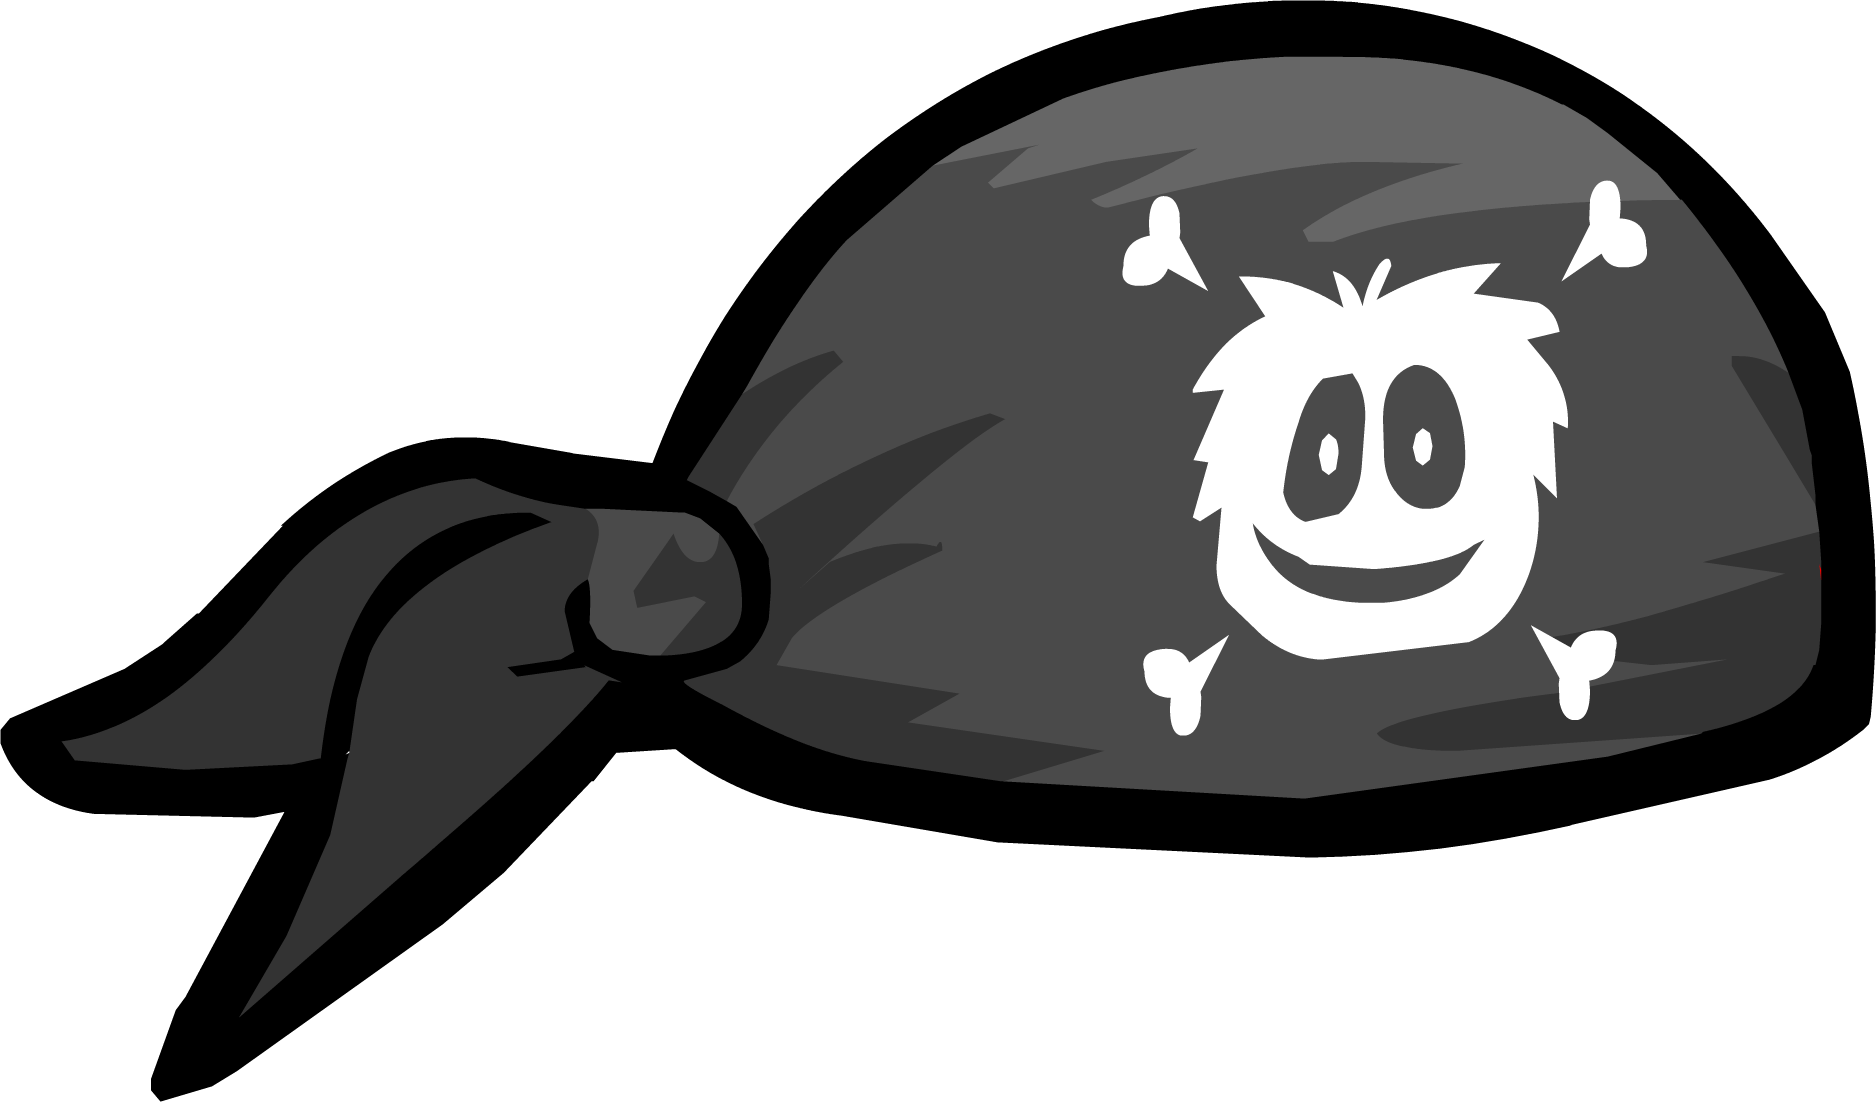 Bandana with Smile Logo - Puffle Bandana | Club Penguin Wiki | FANDOM powered by Wikia